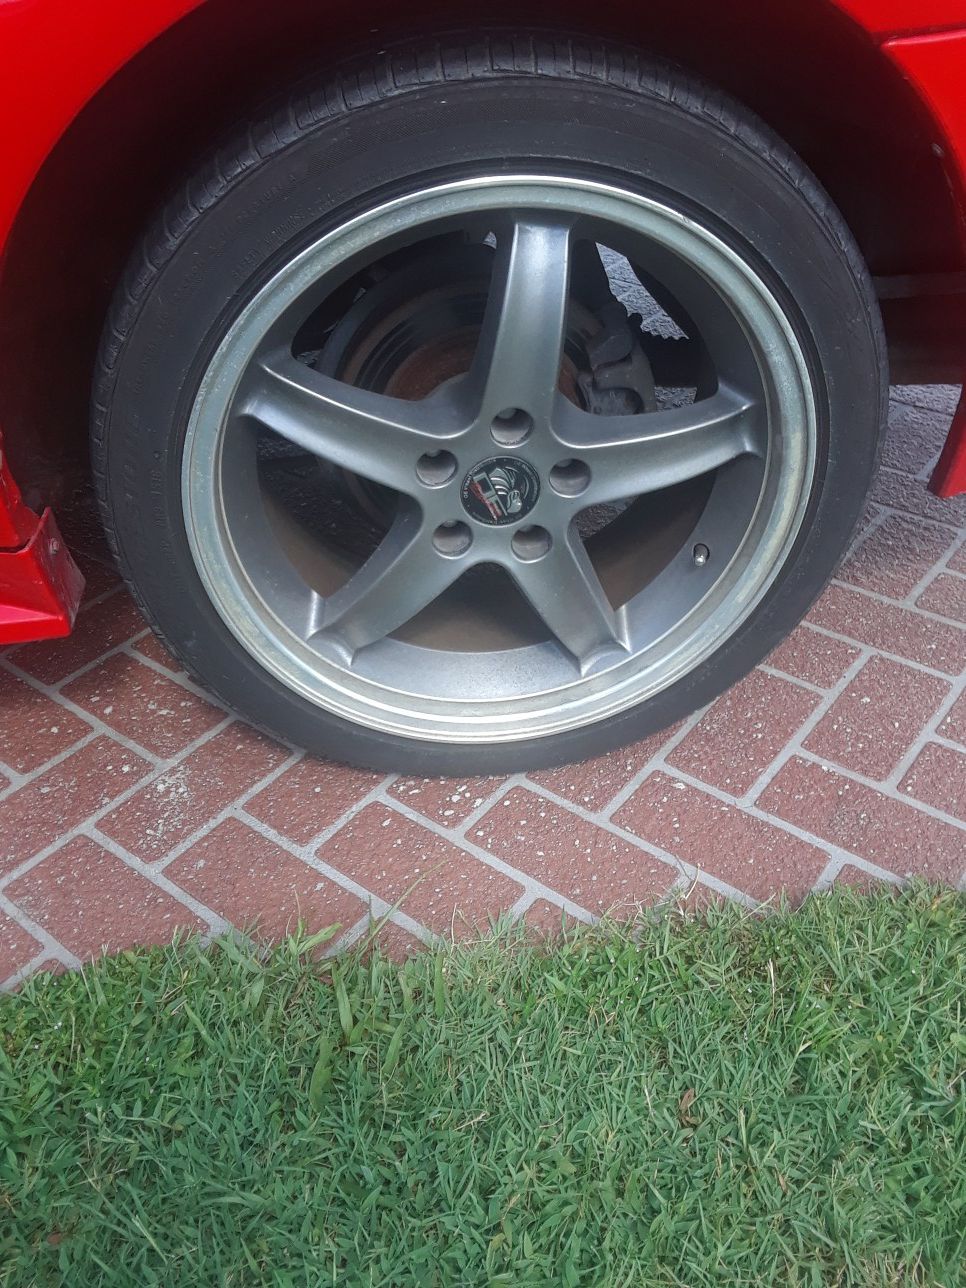 18 inch rims (4). With 2016 Bridgestone tires with 50% tread left. Good condition.